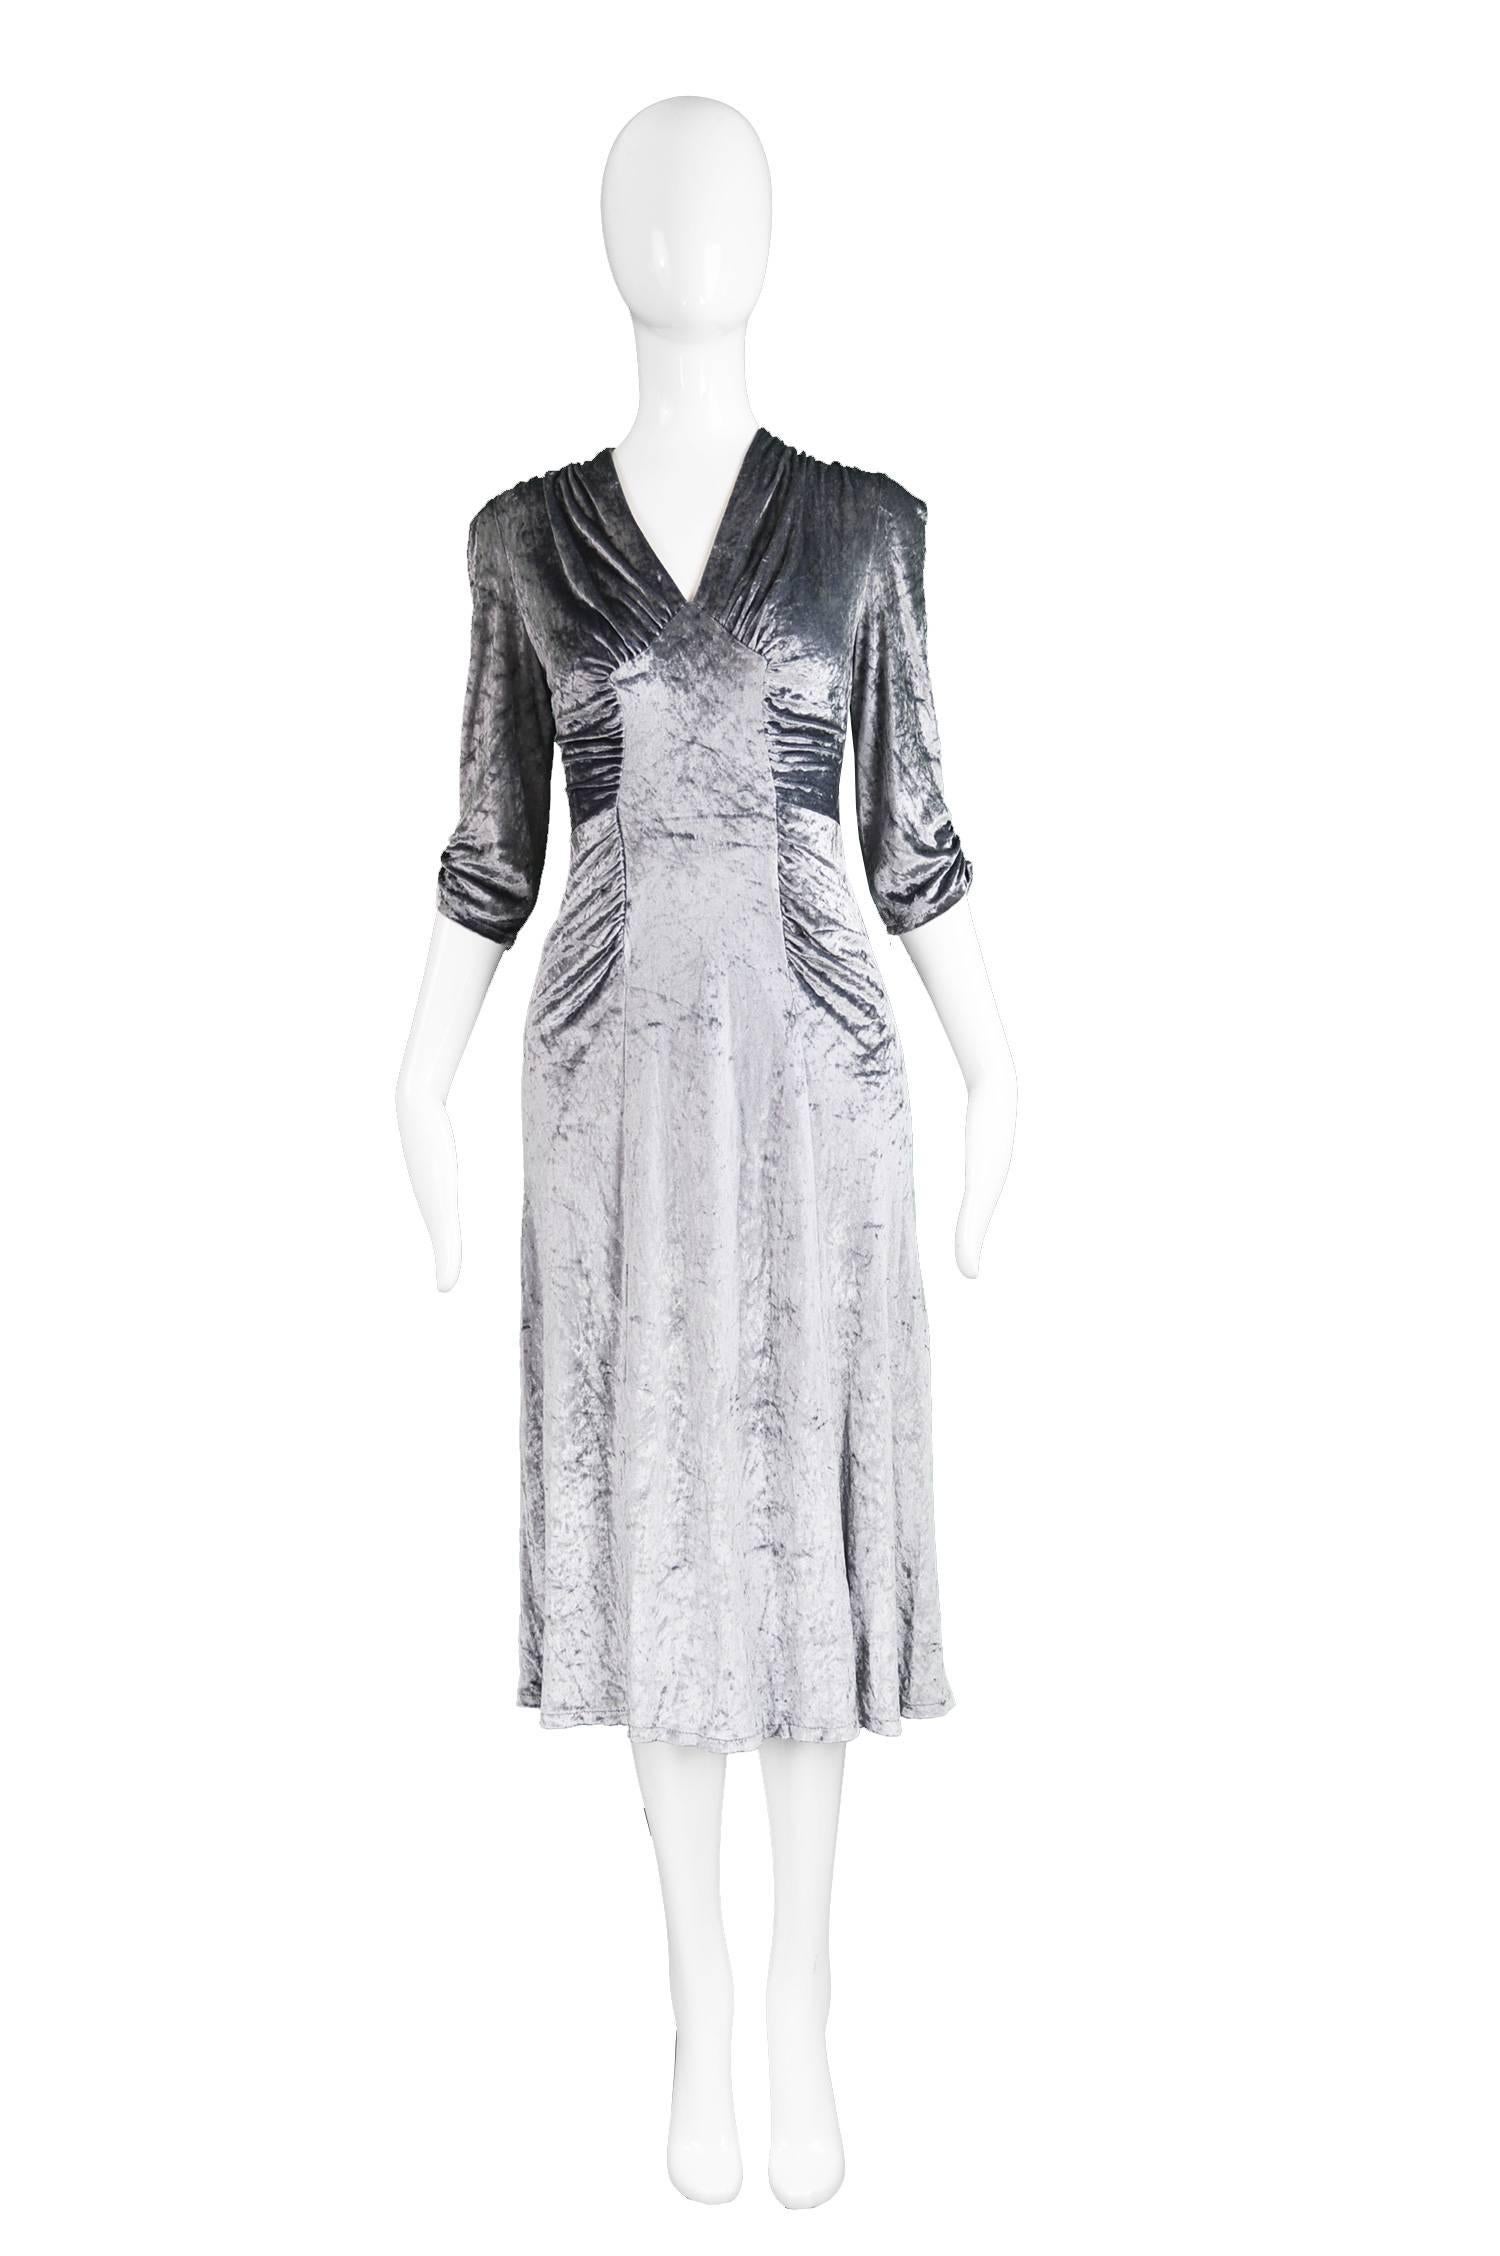 Irvine Sellars of Carnaby Street Vintage Silver Velvet Dress, 1970s

Esimated Size: UK 10/ US 6 / EU 38. Please check measurements. 
Bust - 34” / 86cm
Waist - 30” / 76cm
Hips - 36” / 91cm
Length (Shoulder to Hem) - 45” / 114cm
Sleeve Pit to Cuff -